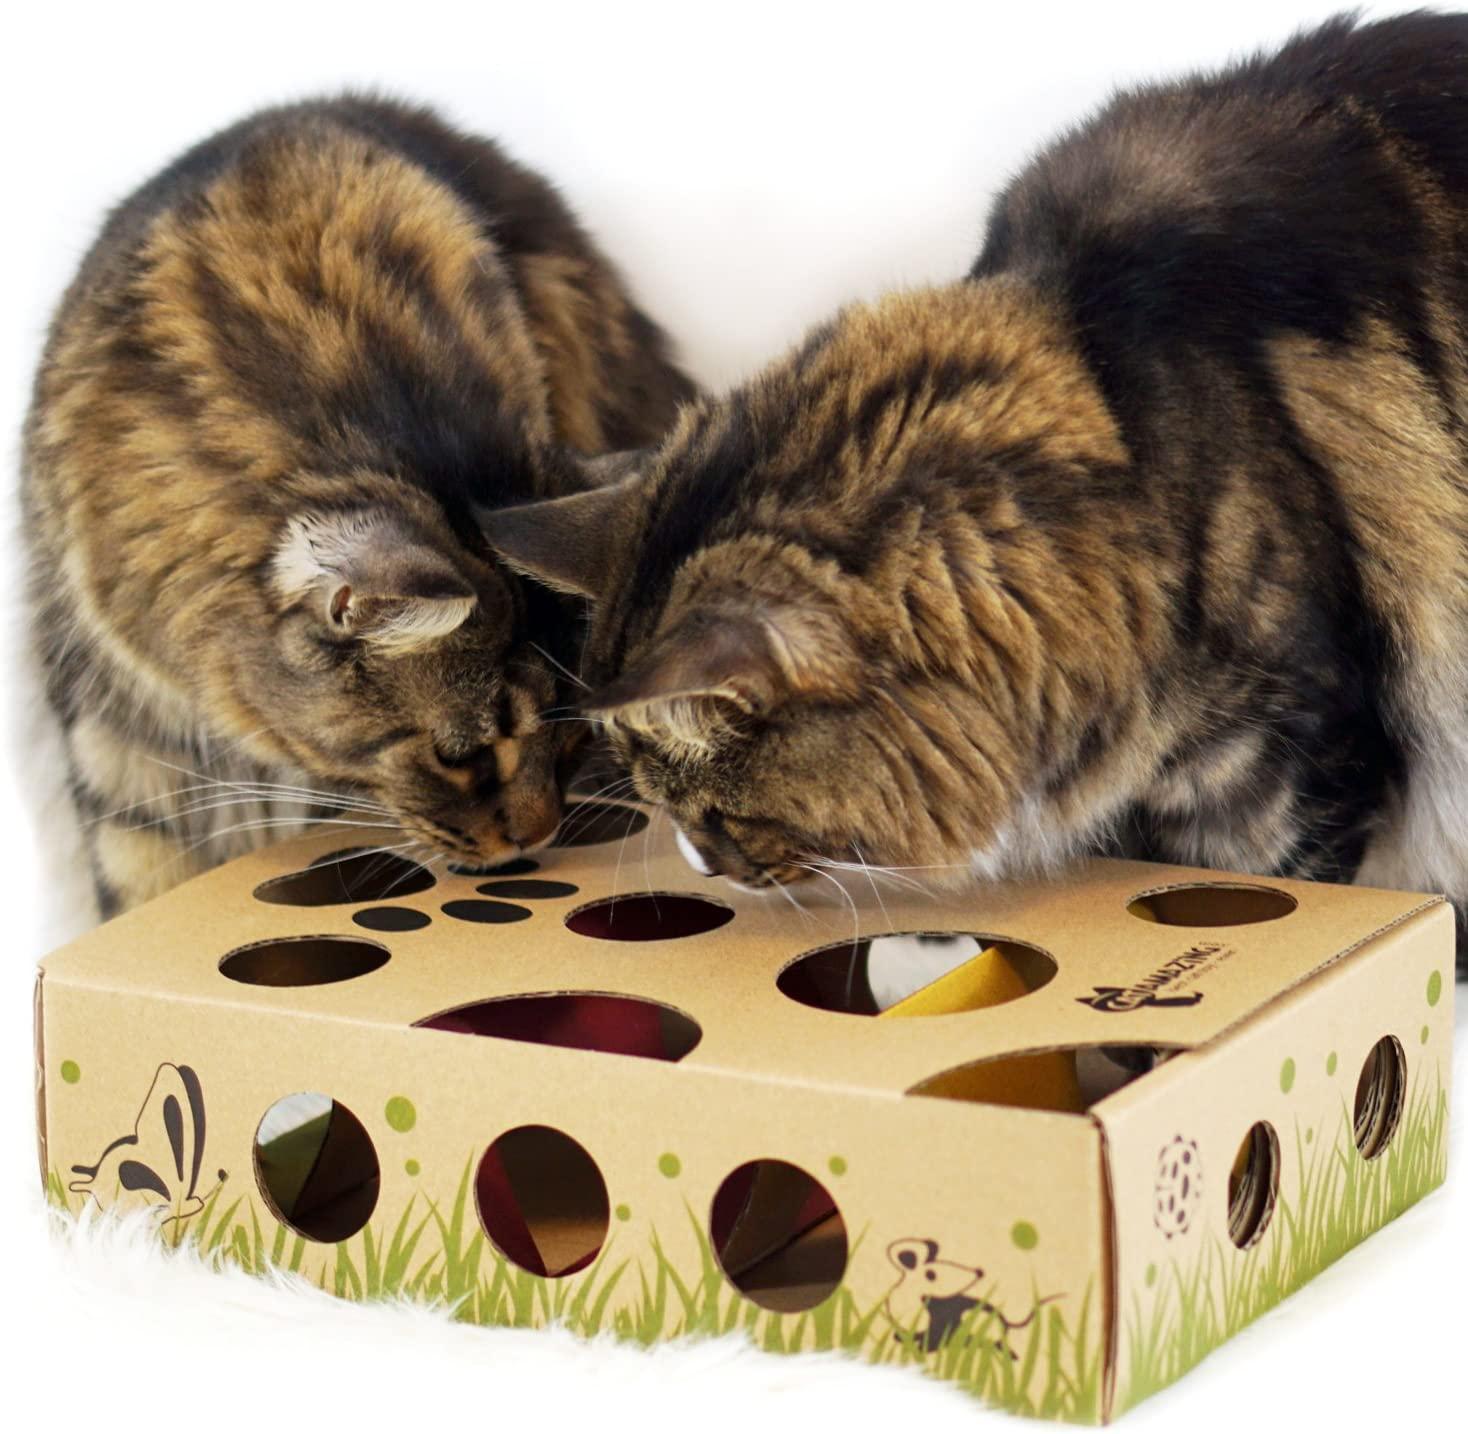 Cat Amazing Classic Cat Puzzle Feeder Interactive Enrichment Toy